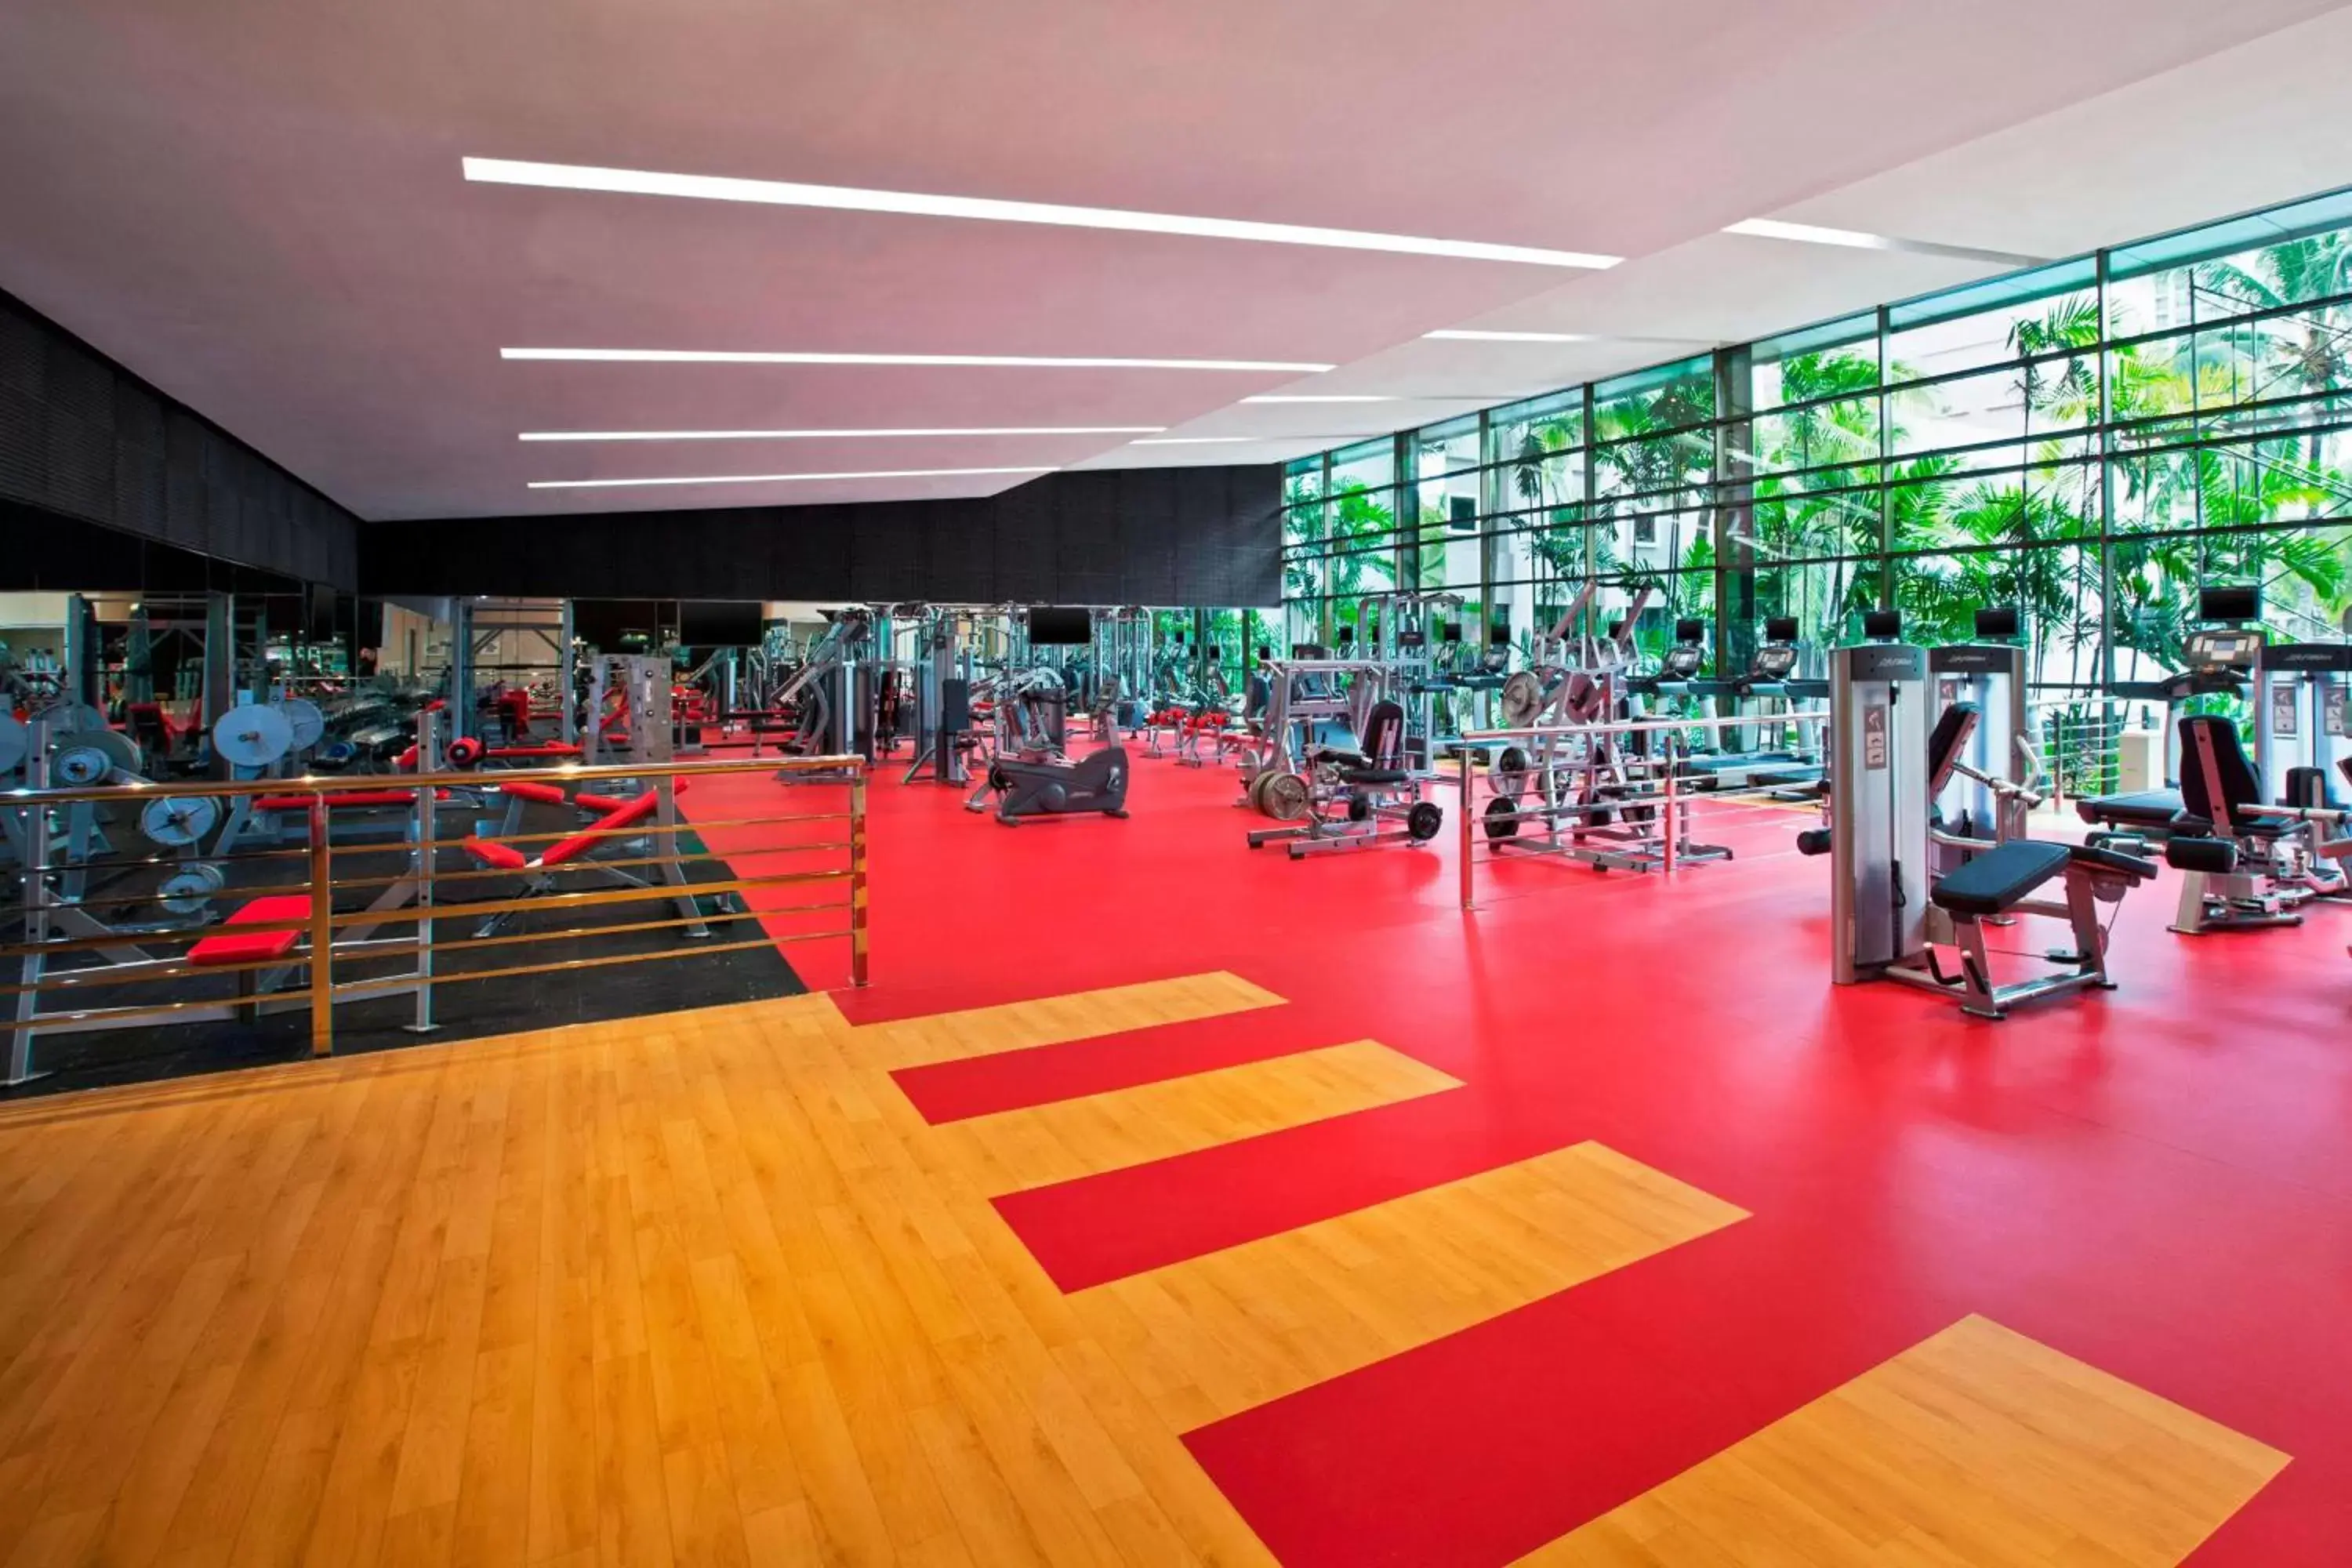 Fitness centre/facilities, Fitness Center/Facilities in Sheraton Grand Panama